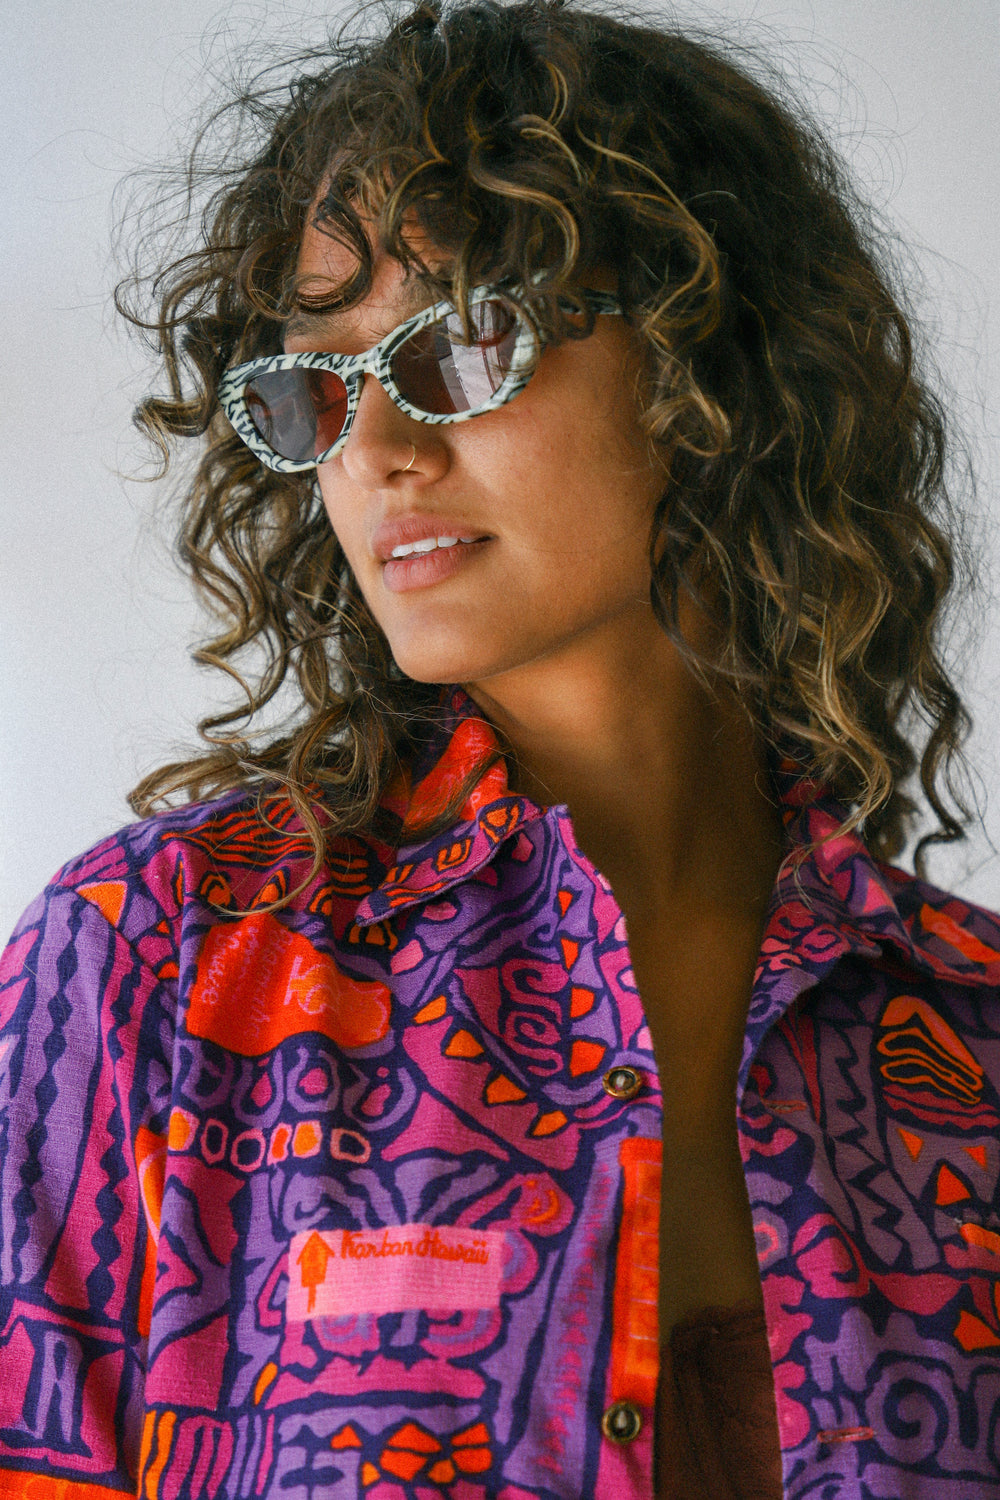 Savannah Lunette Sunglasses